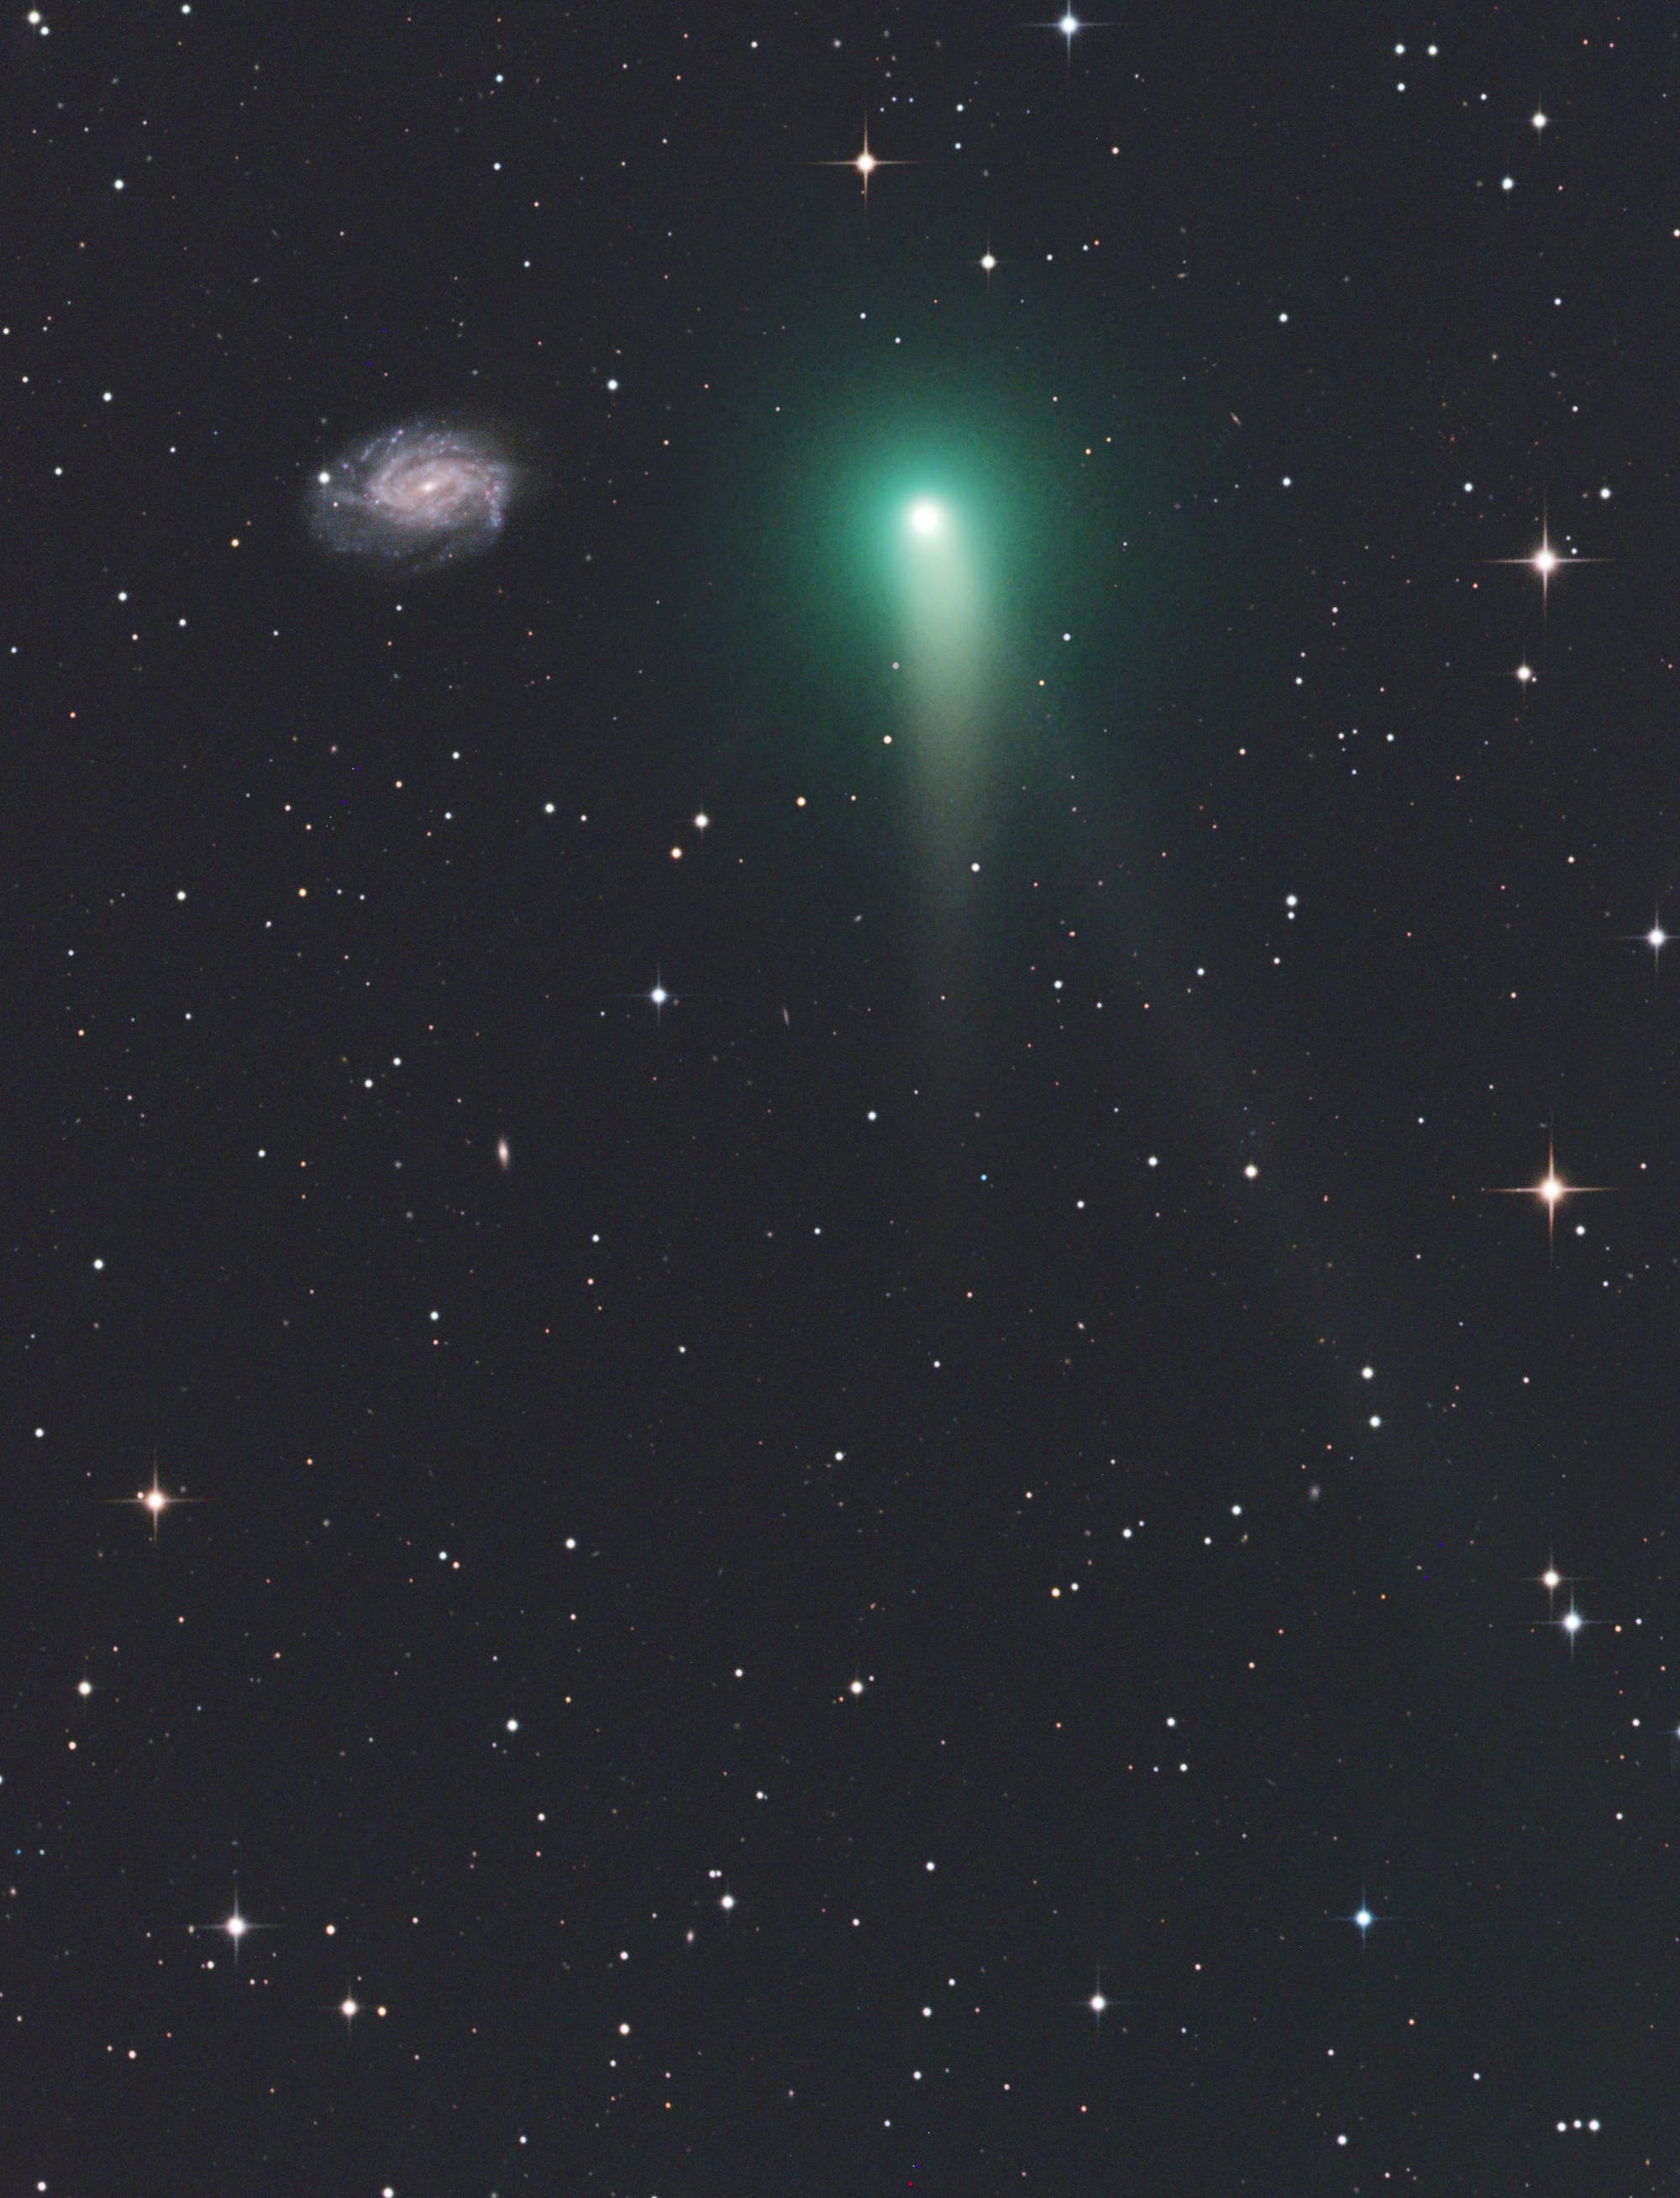 Komet C/2012 K1 Panstarrs bei Galaxie NGC 3726